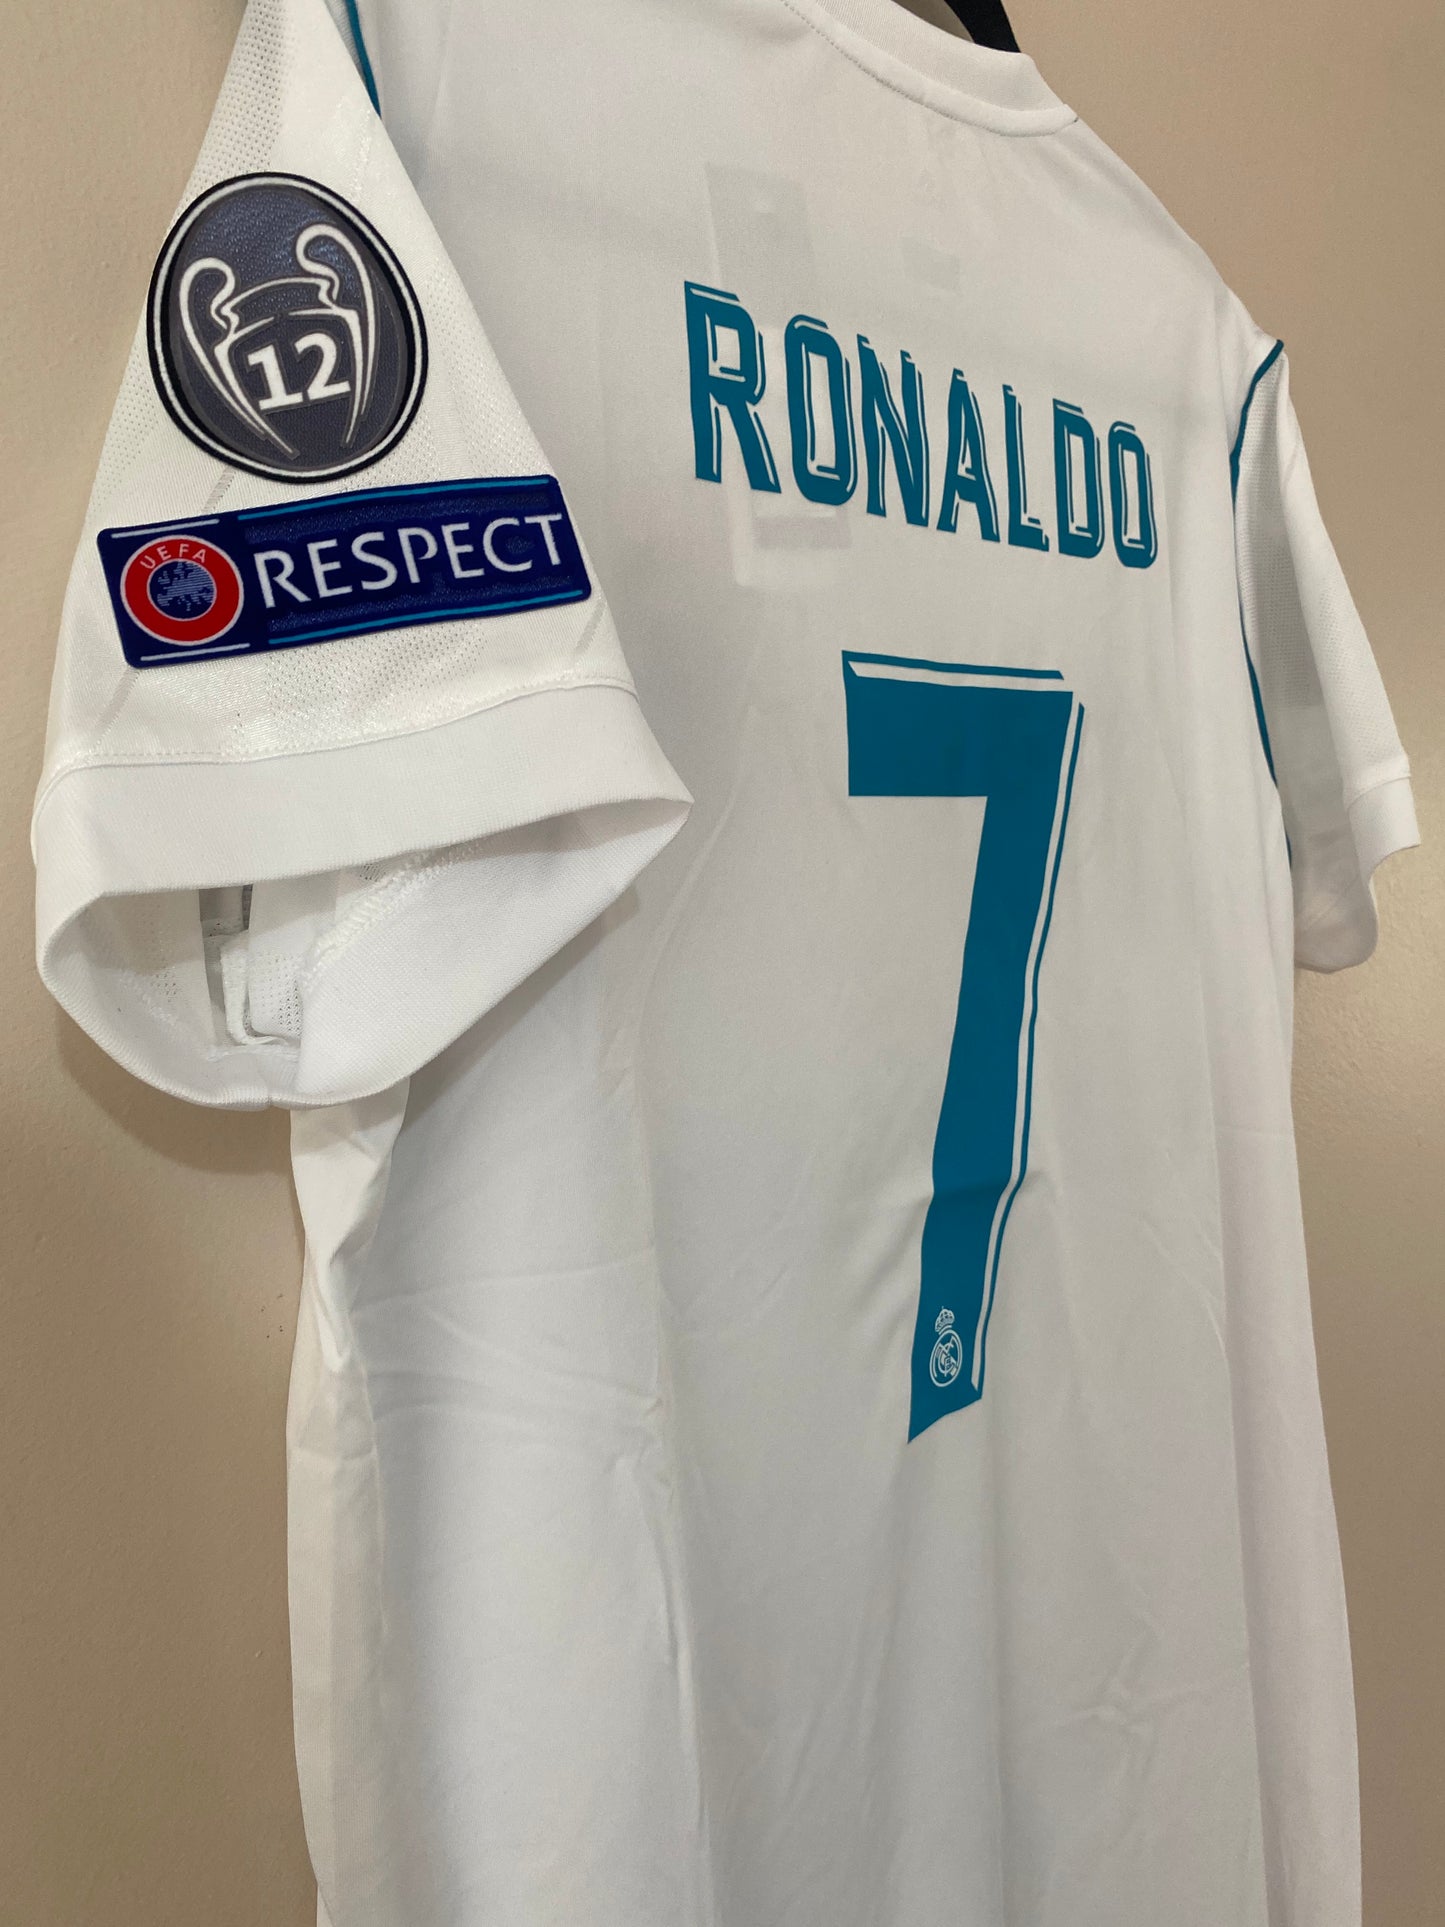 Camiseta Versión Fan Real Madrid Final 2018 Ronaldo 7